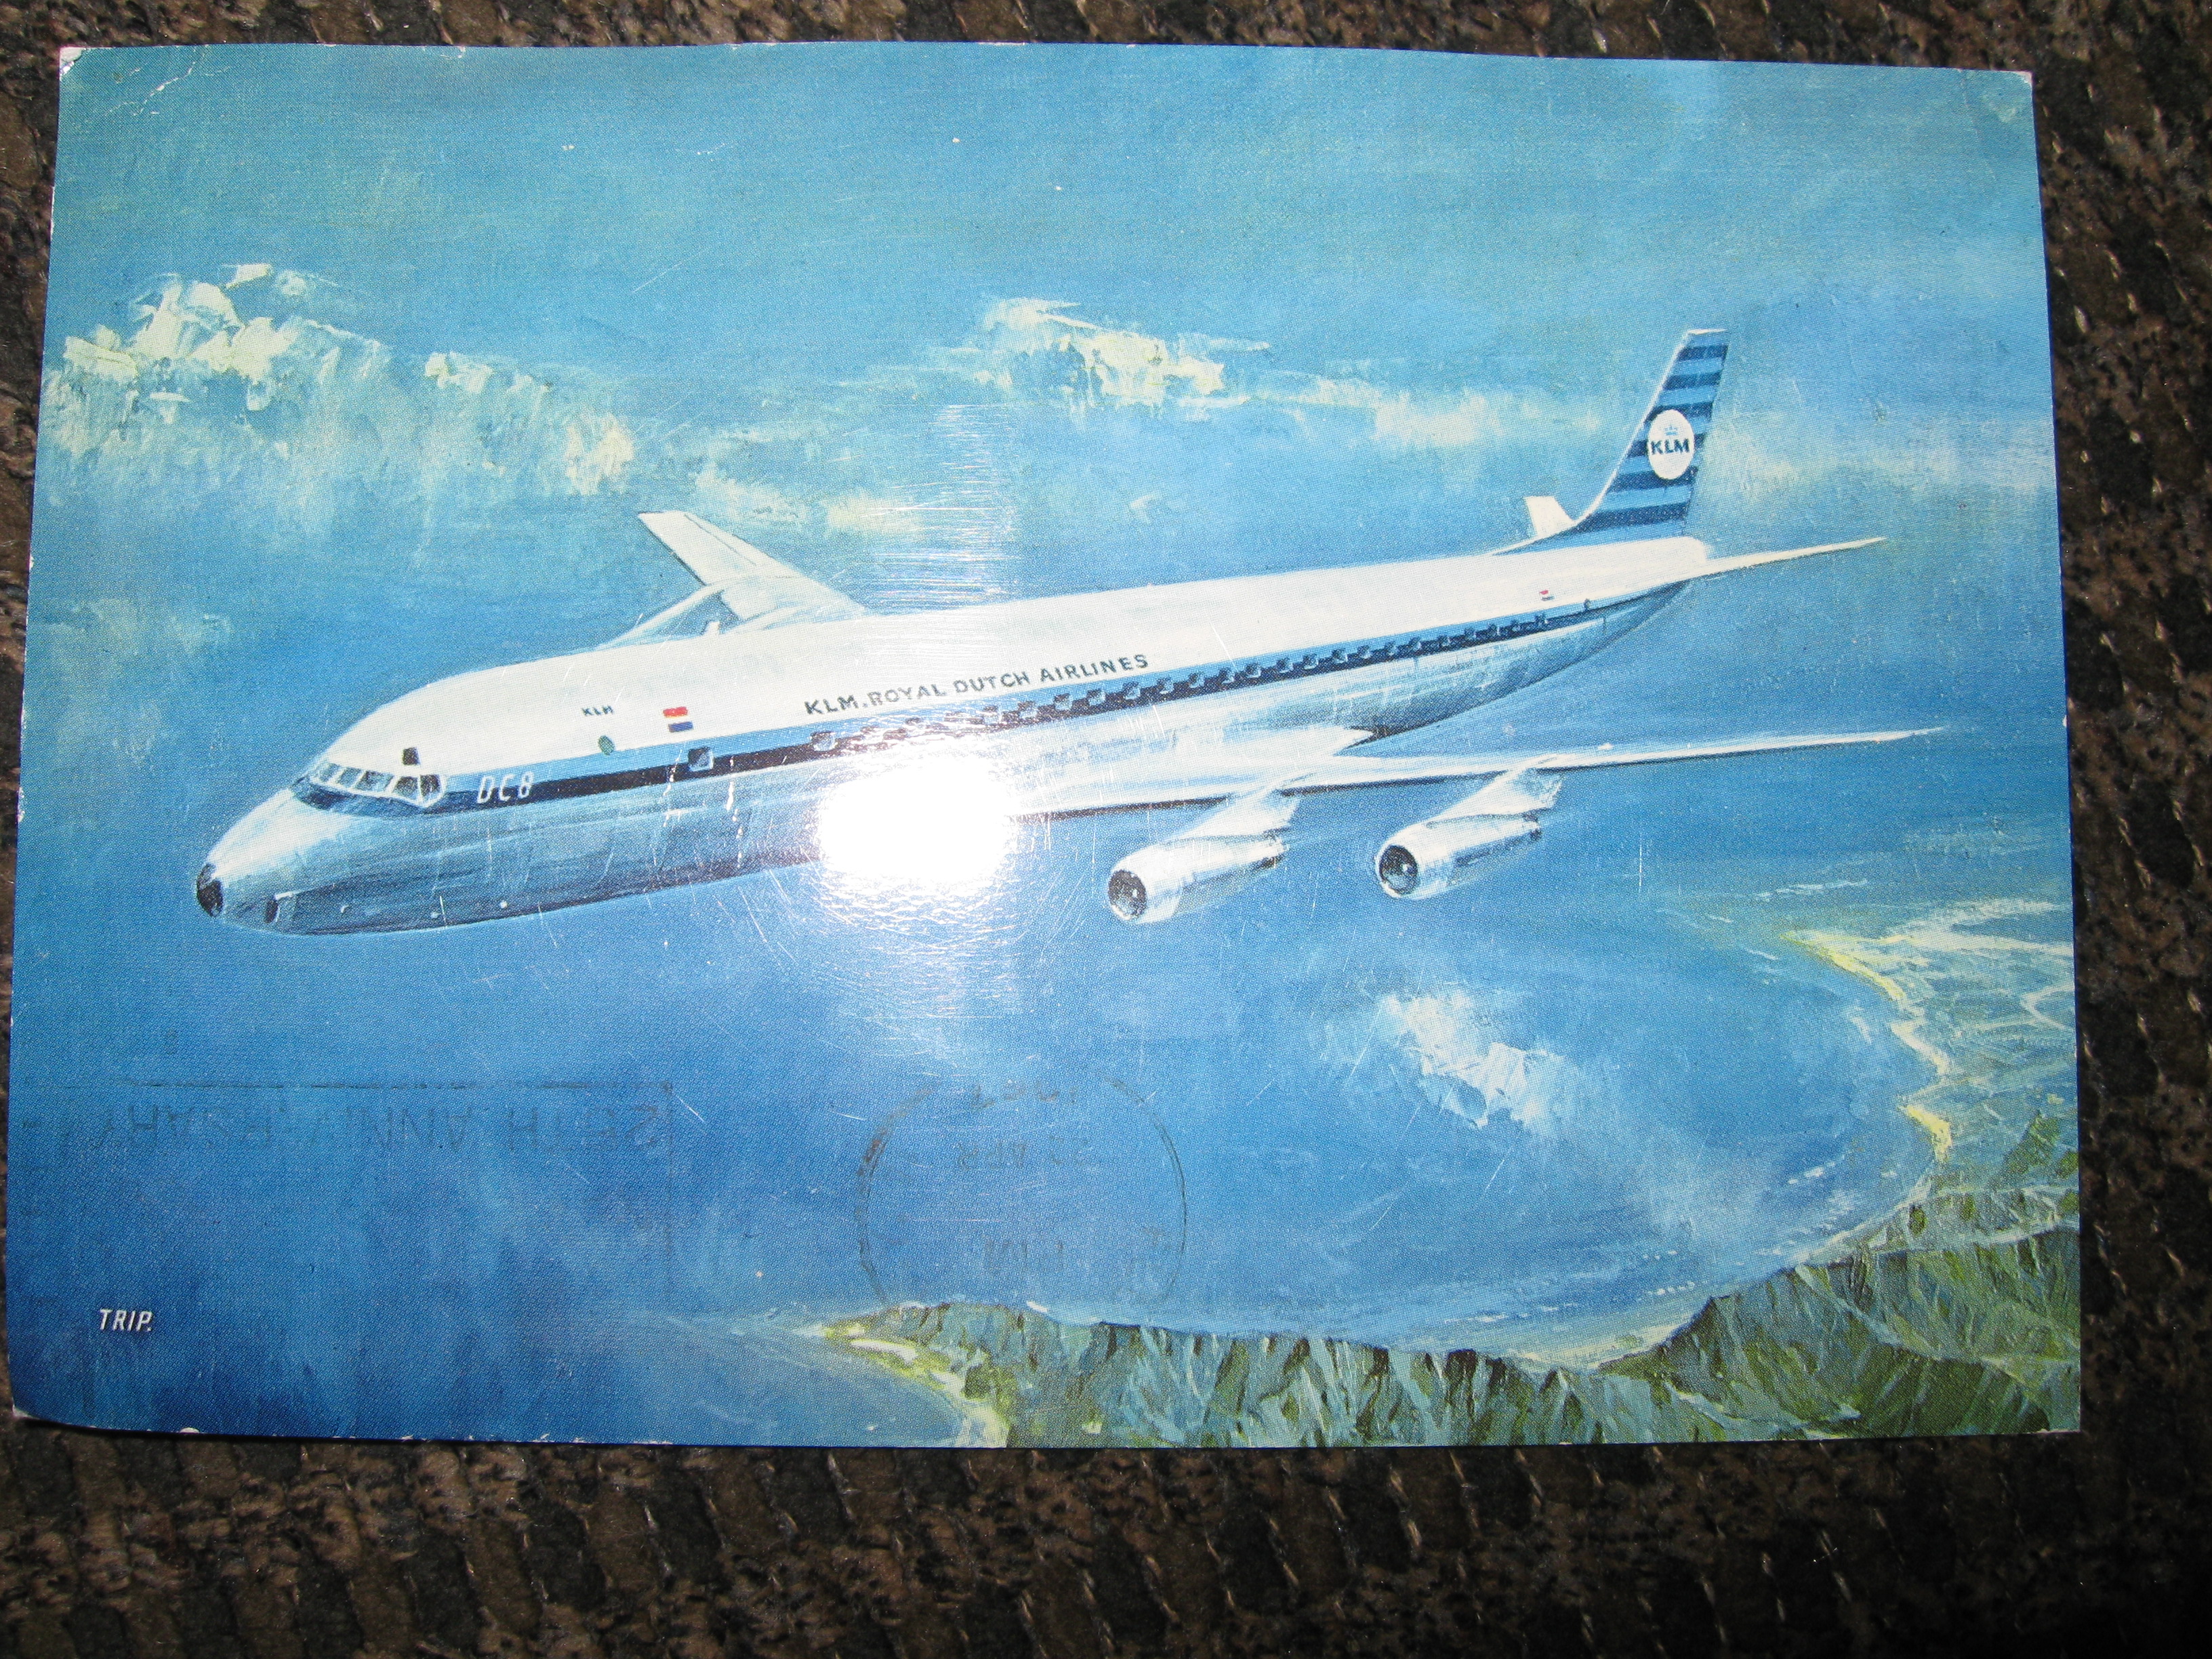 KLM's Douglas DC-8 Intercontinental jet